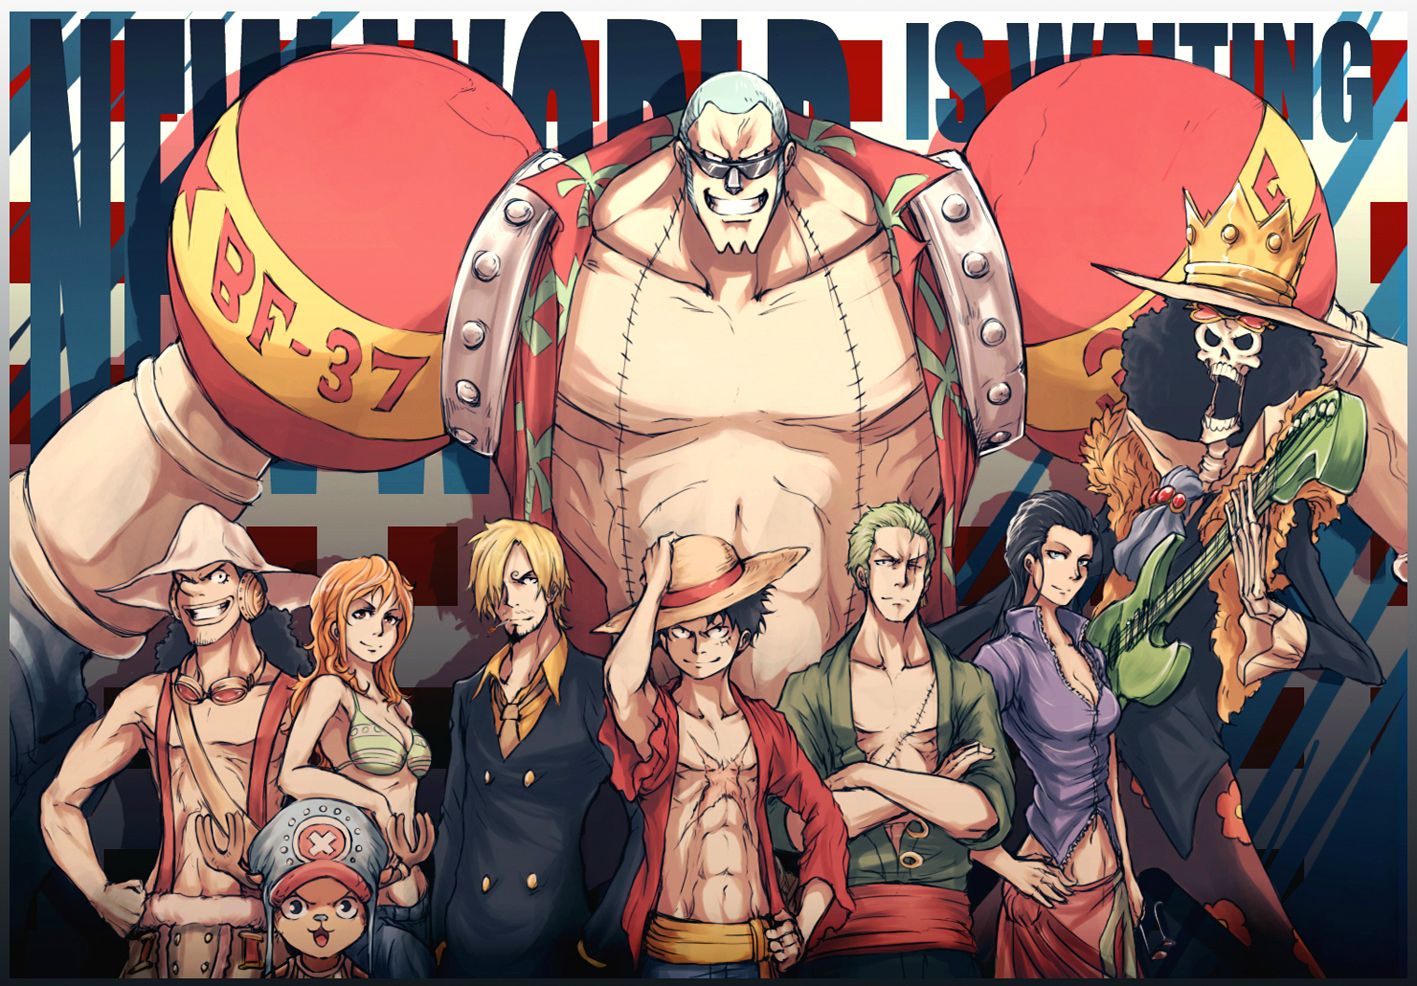 Free Download HD Wallpaper for Desktop: One Piece New World Wallpaper Desktop (HD)